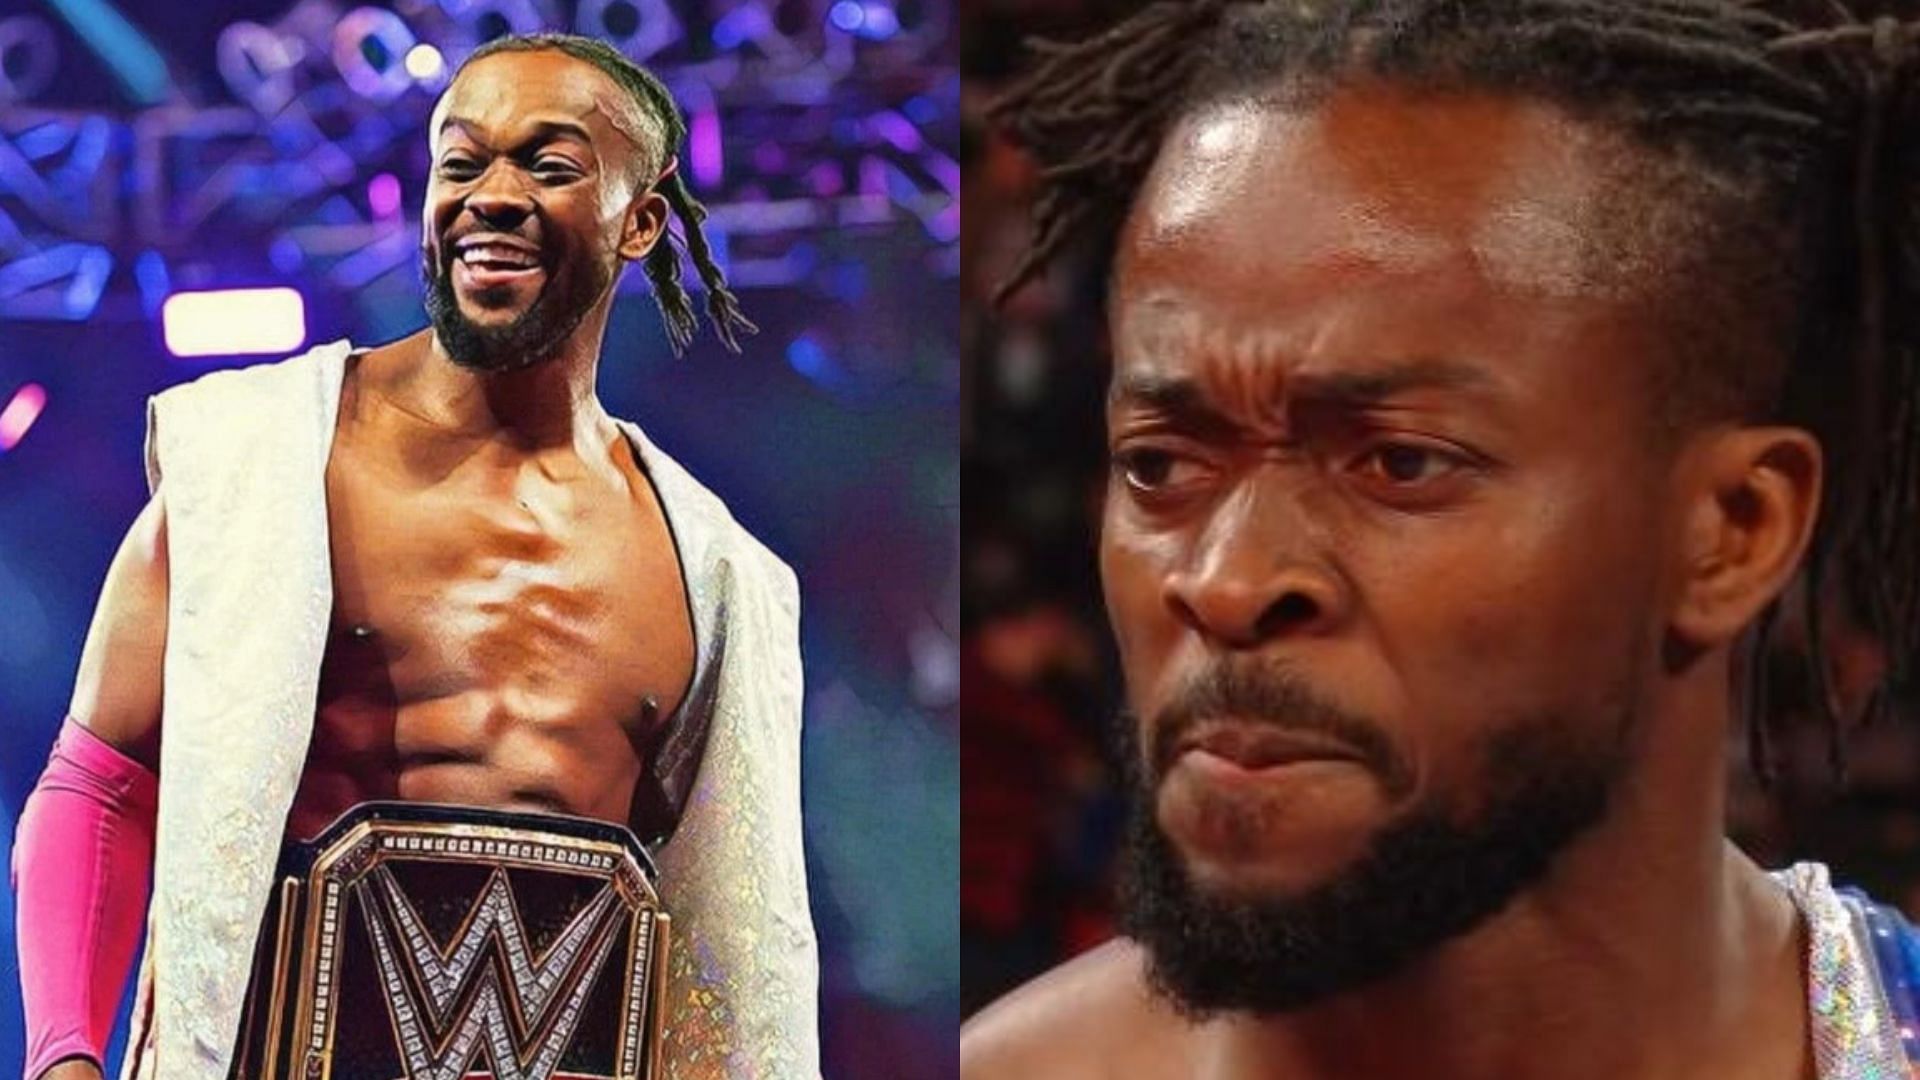 "It's karma" - NXT stars claim former WWE Champion Kofi Kingston deserved to be injured ahead of WrestleMania